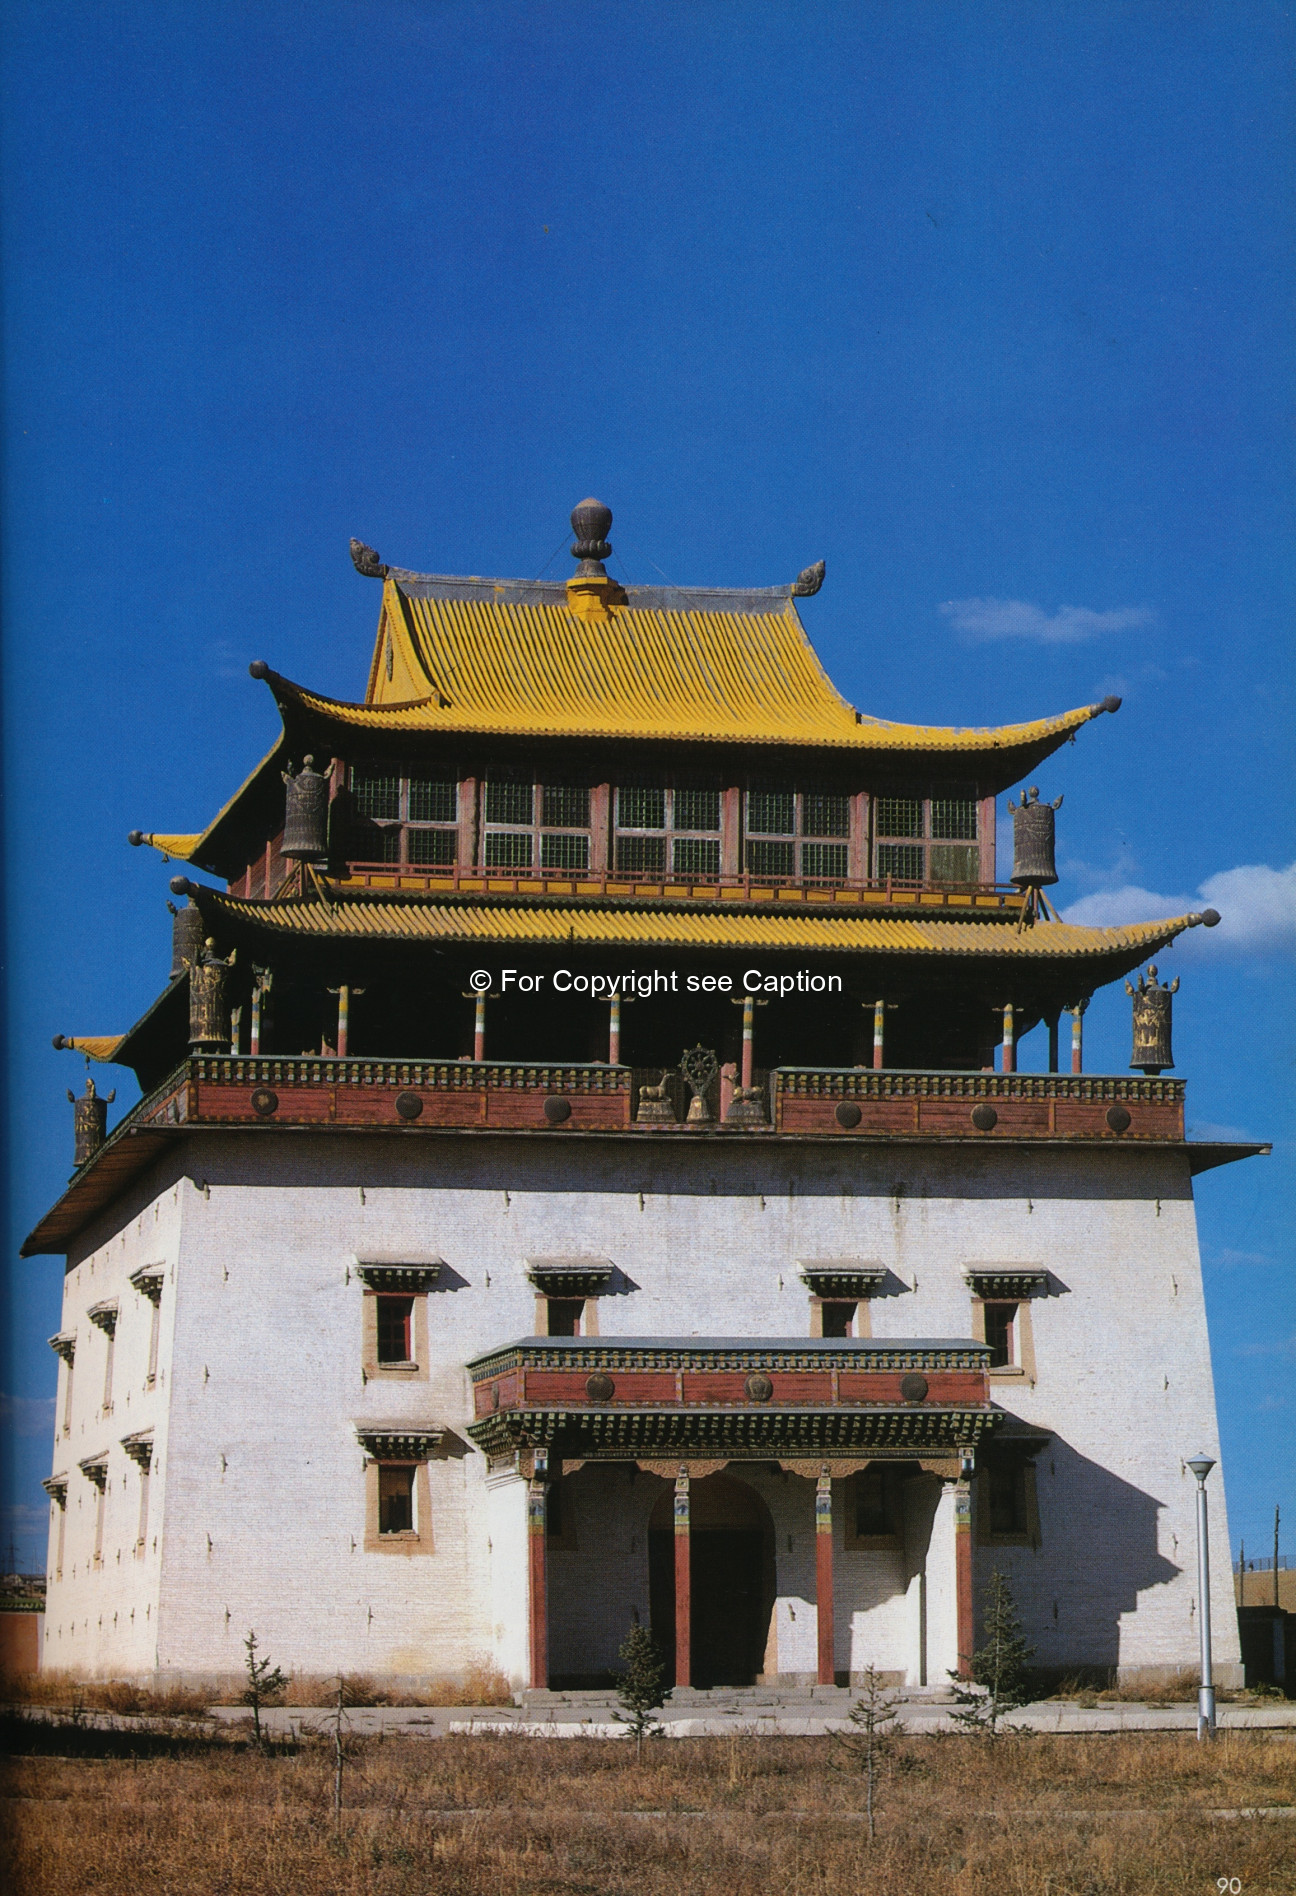 Janraiseg temple. Tsültem, N., Mongolian Architecture. Ulaanbaatar 1988, 90